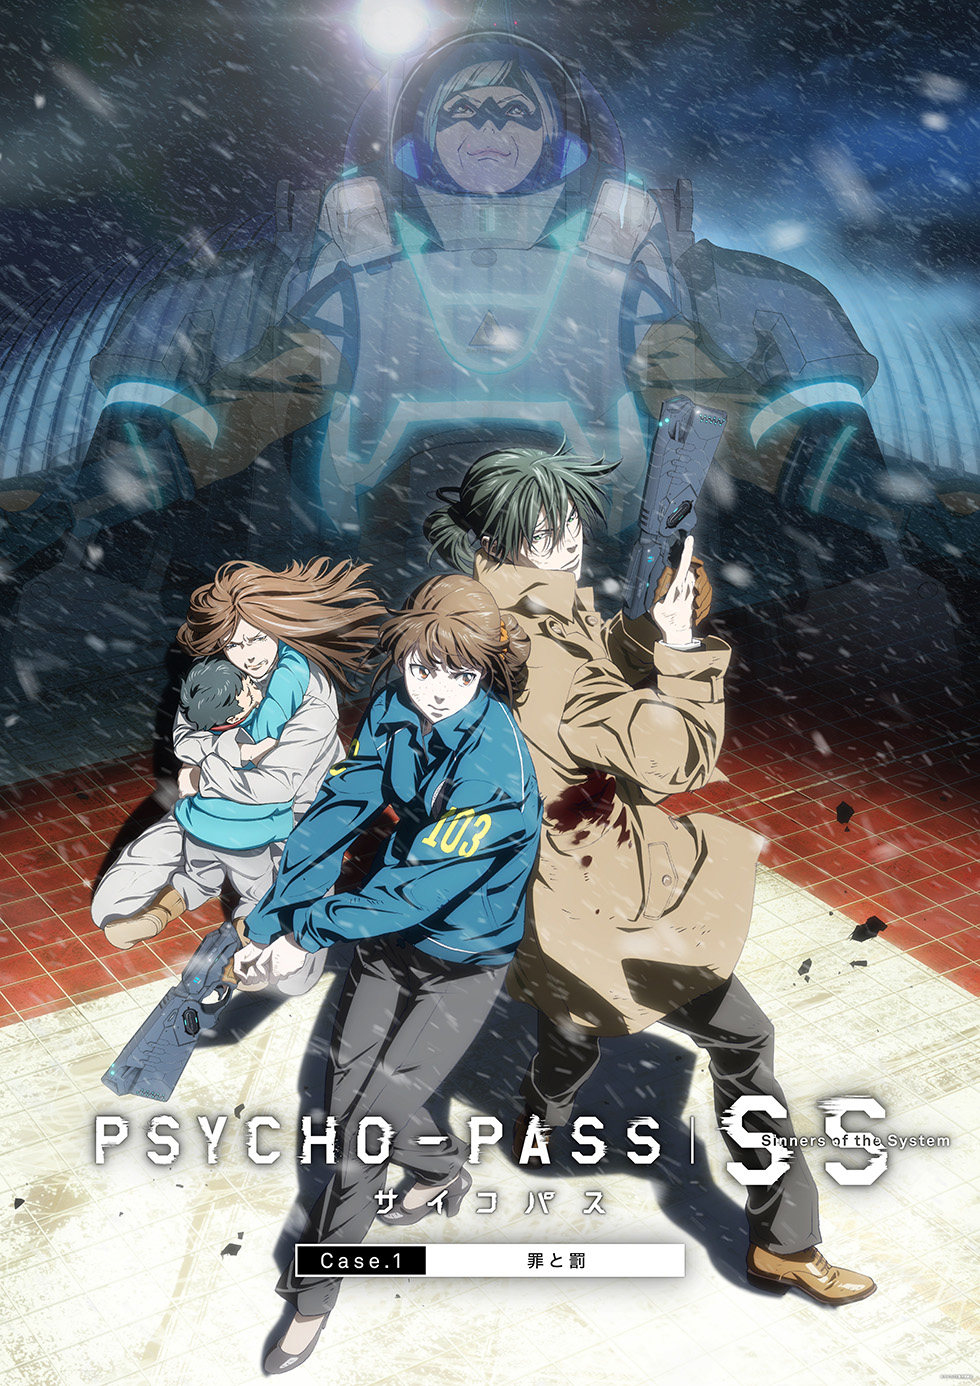 Production I G Psycho Pass サイコパス Sinners Of The System 1月より3作品連続公開